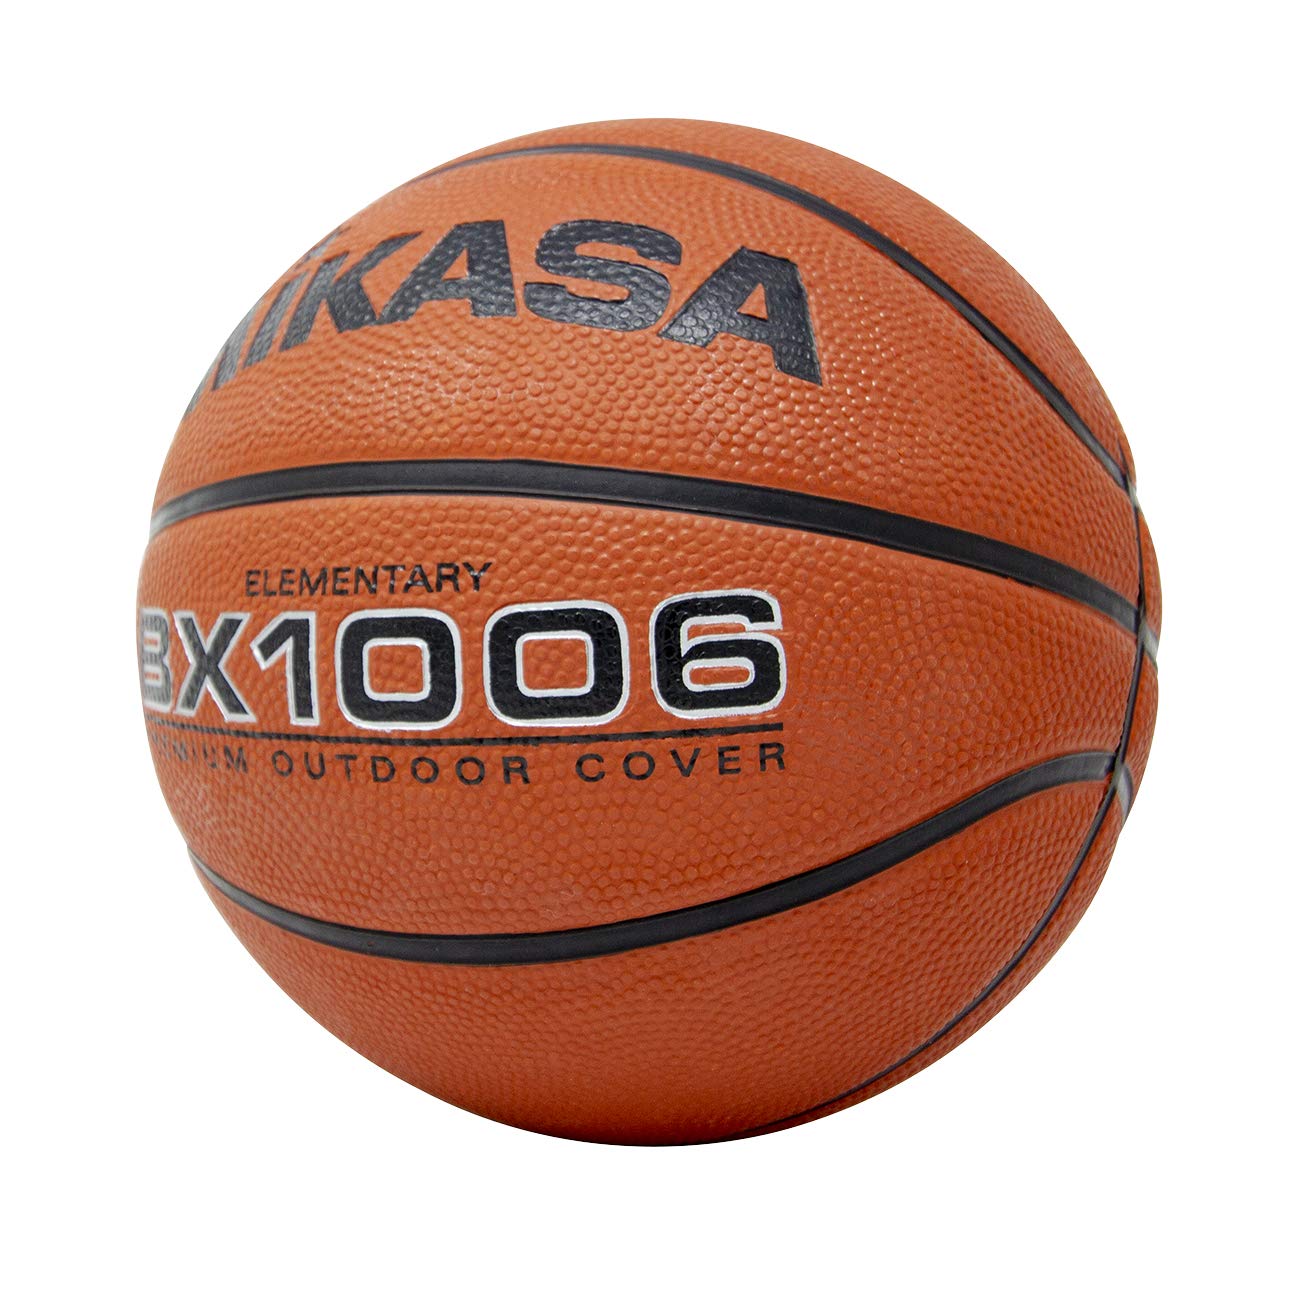 Mikasa BX1000 Premium Rubber Basketball